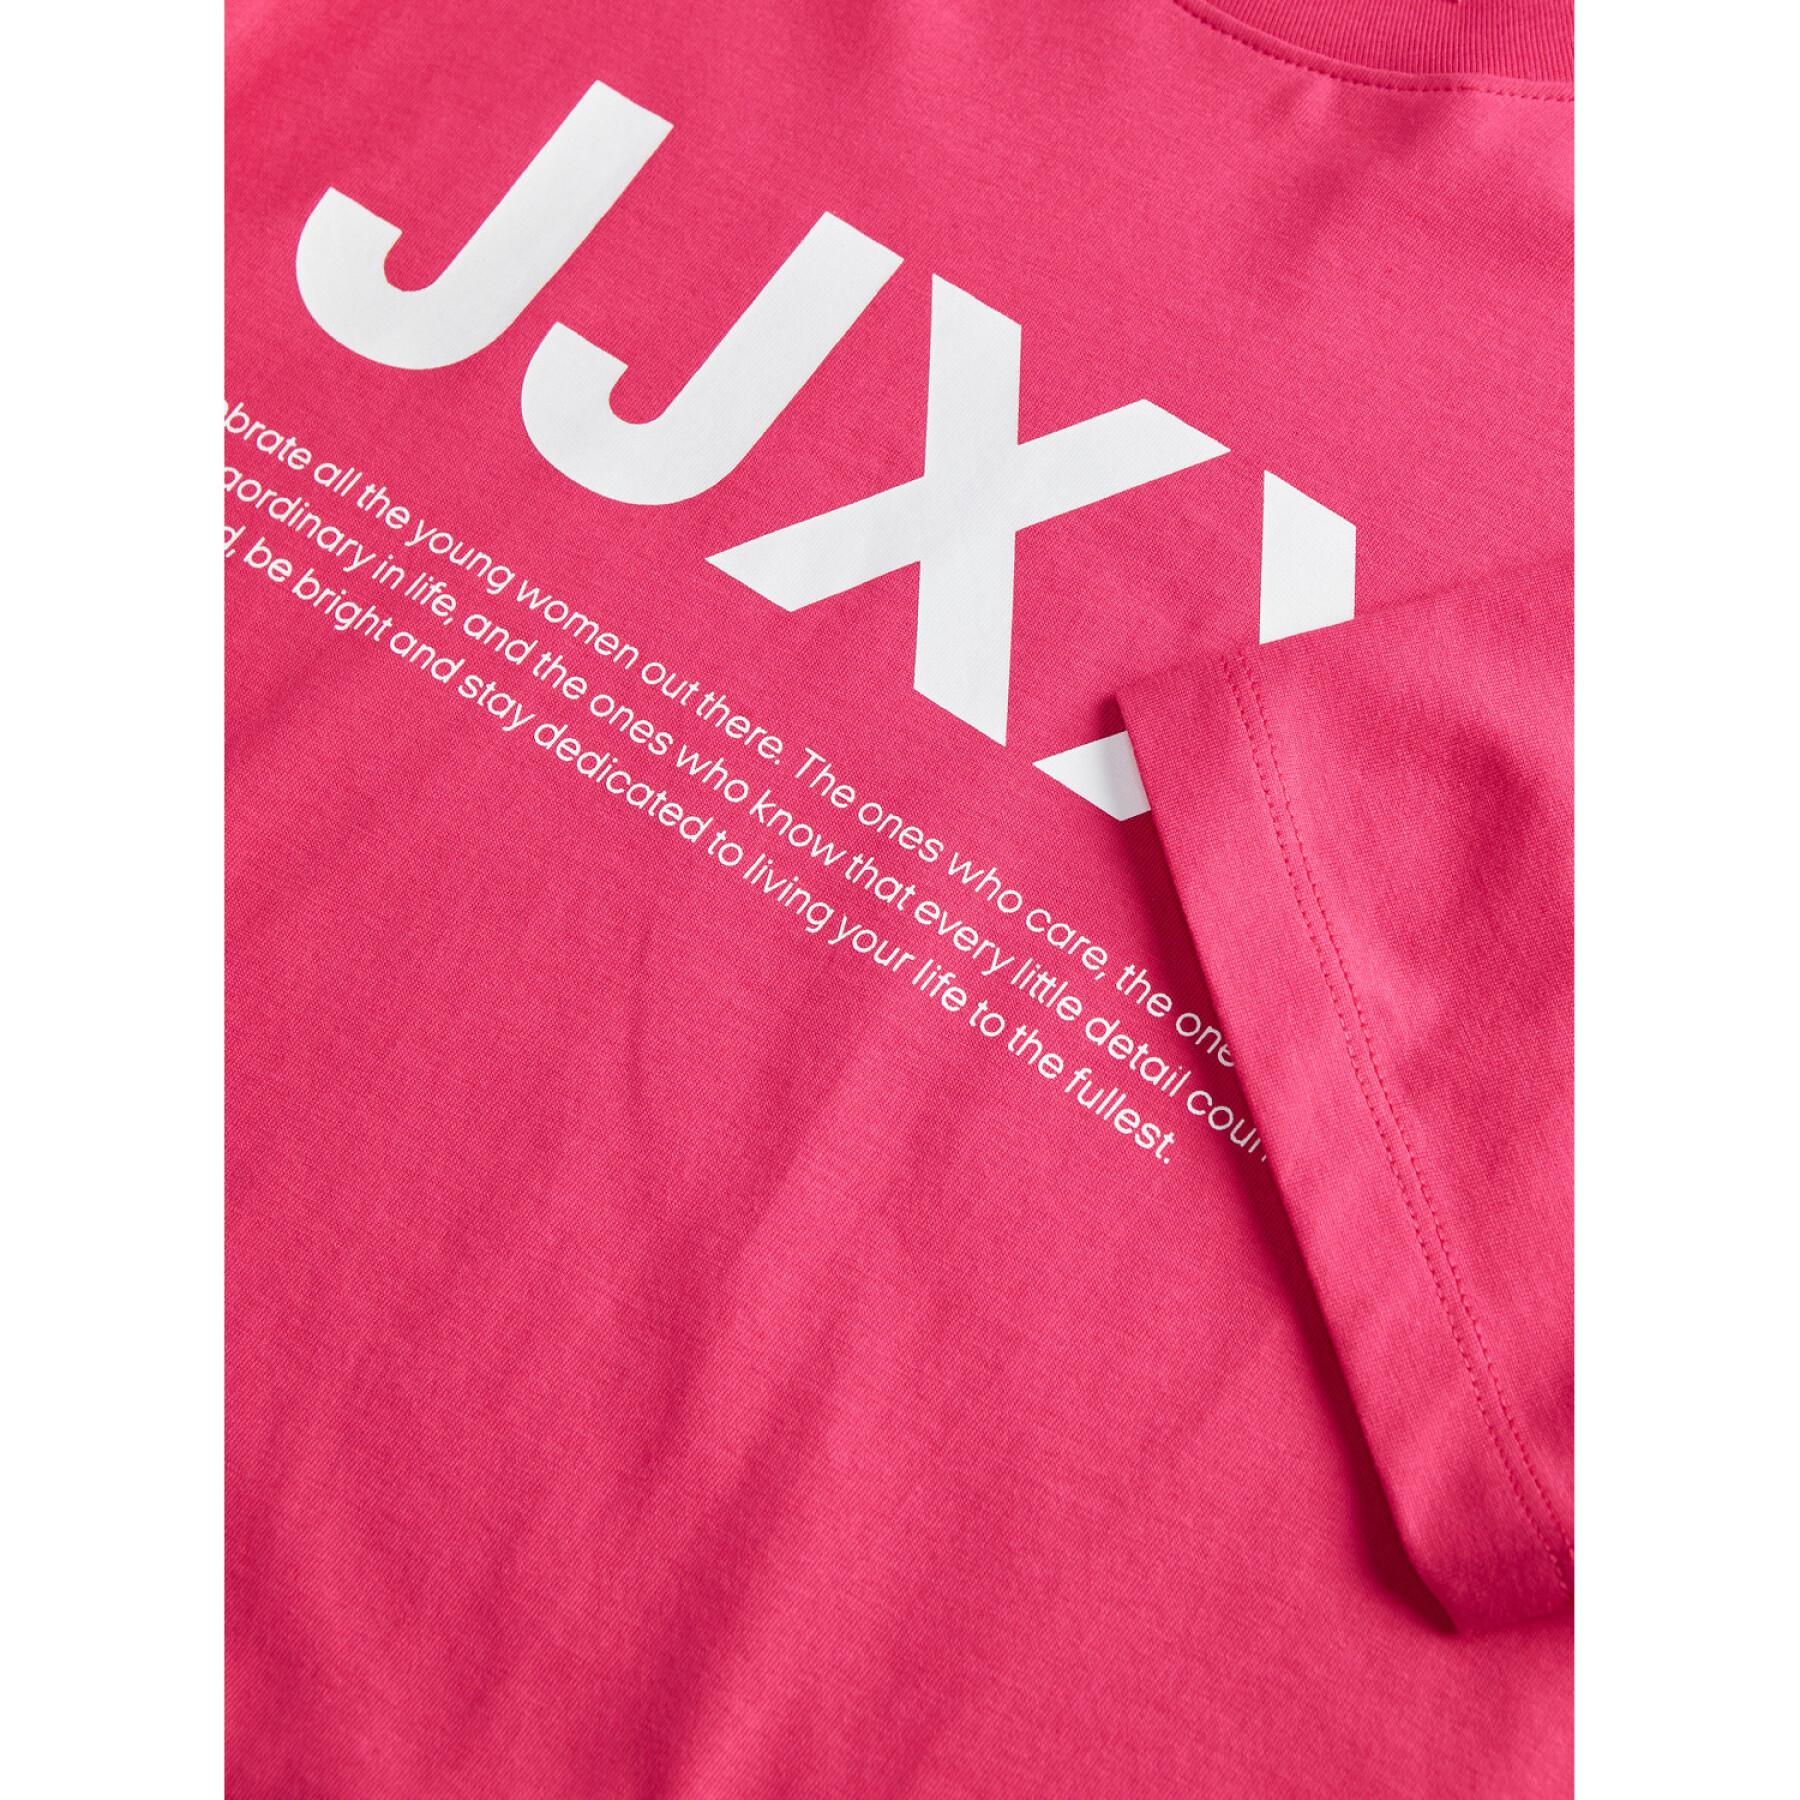 T-Shirt mit großem Logo Frau JJXX Anna Reg Every